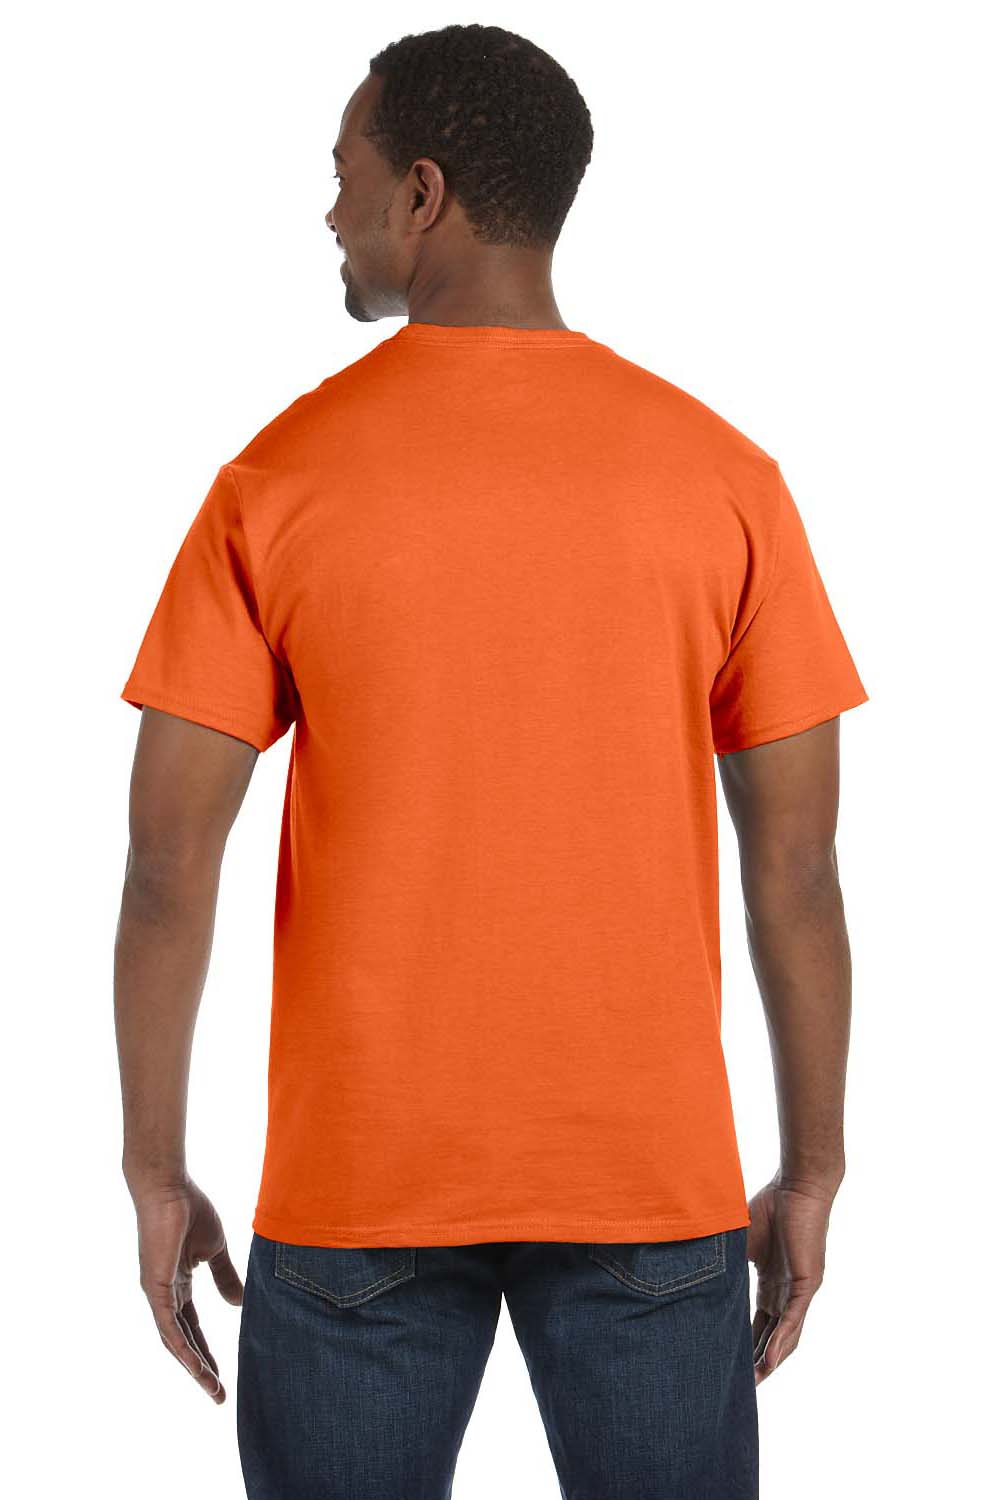 Jerzees 29M Mens Dri-Power Moisture Wicking Short Sleeve Crewneck T-Shirt Tennessee Orange Back